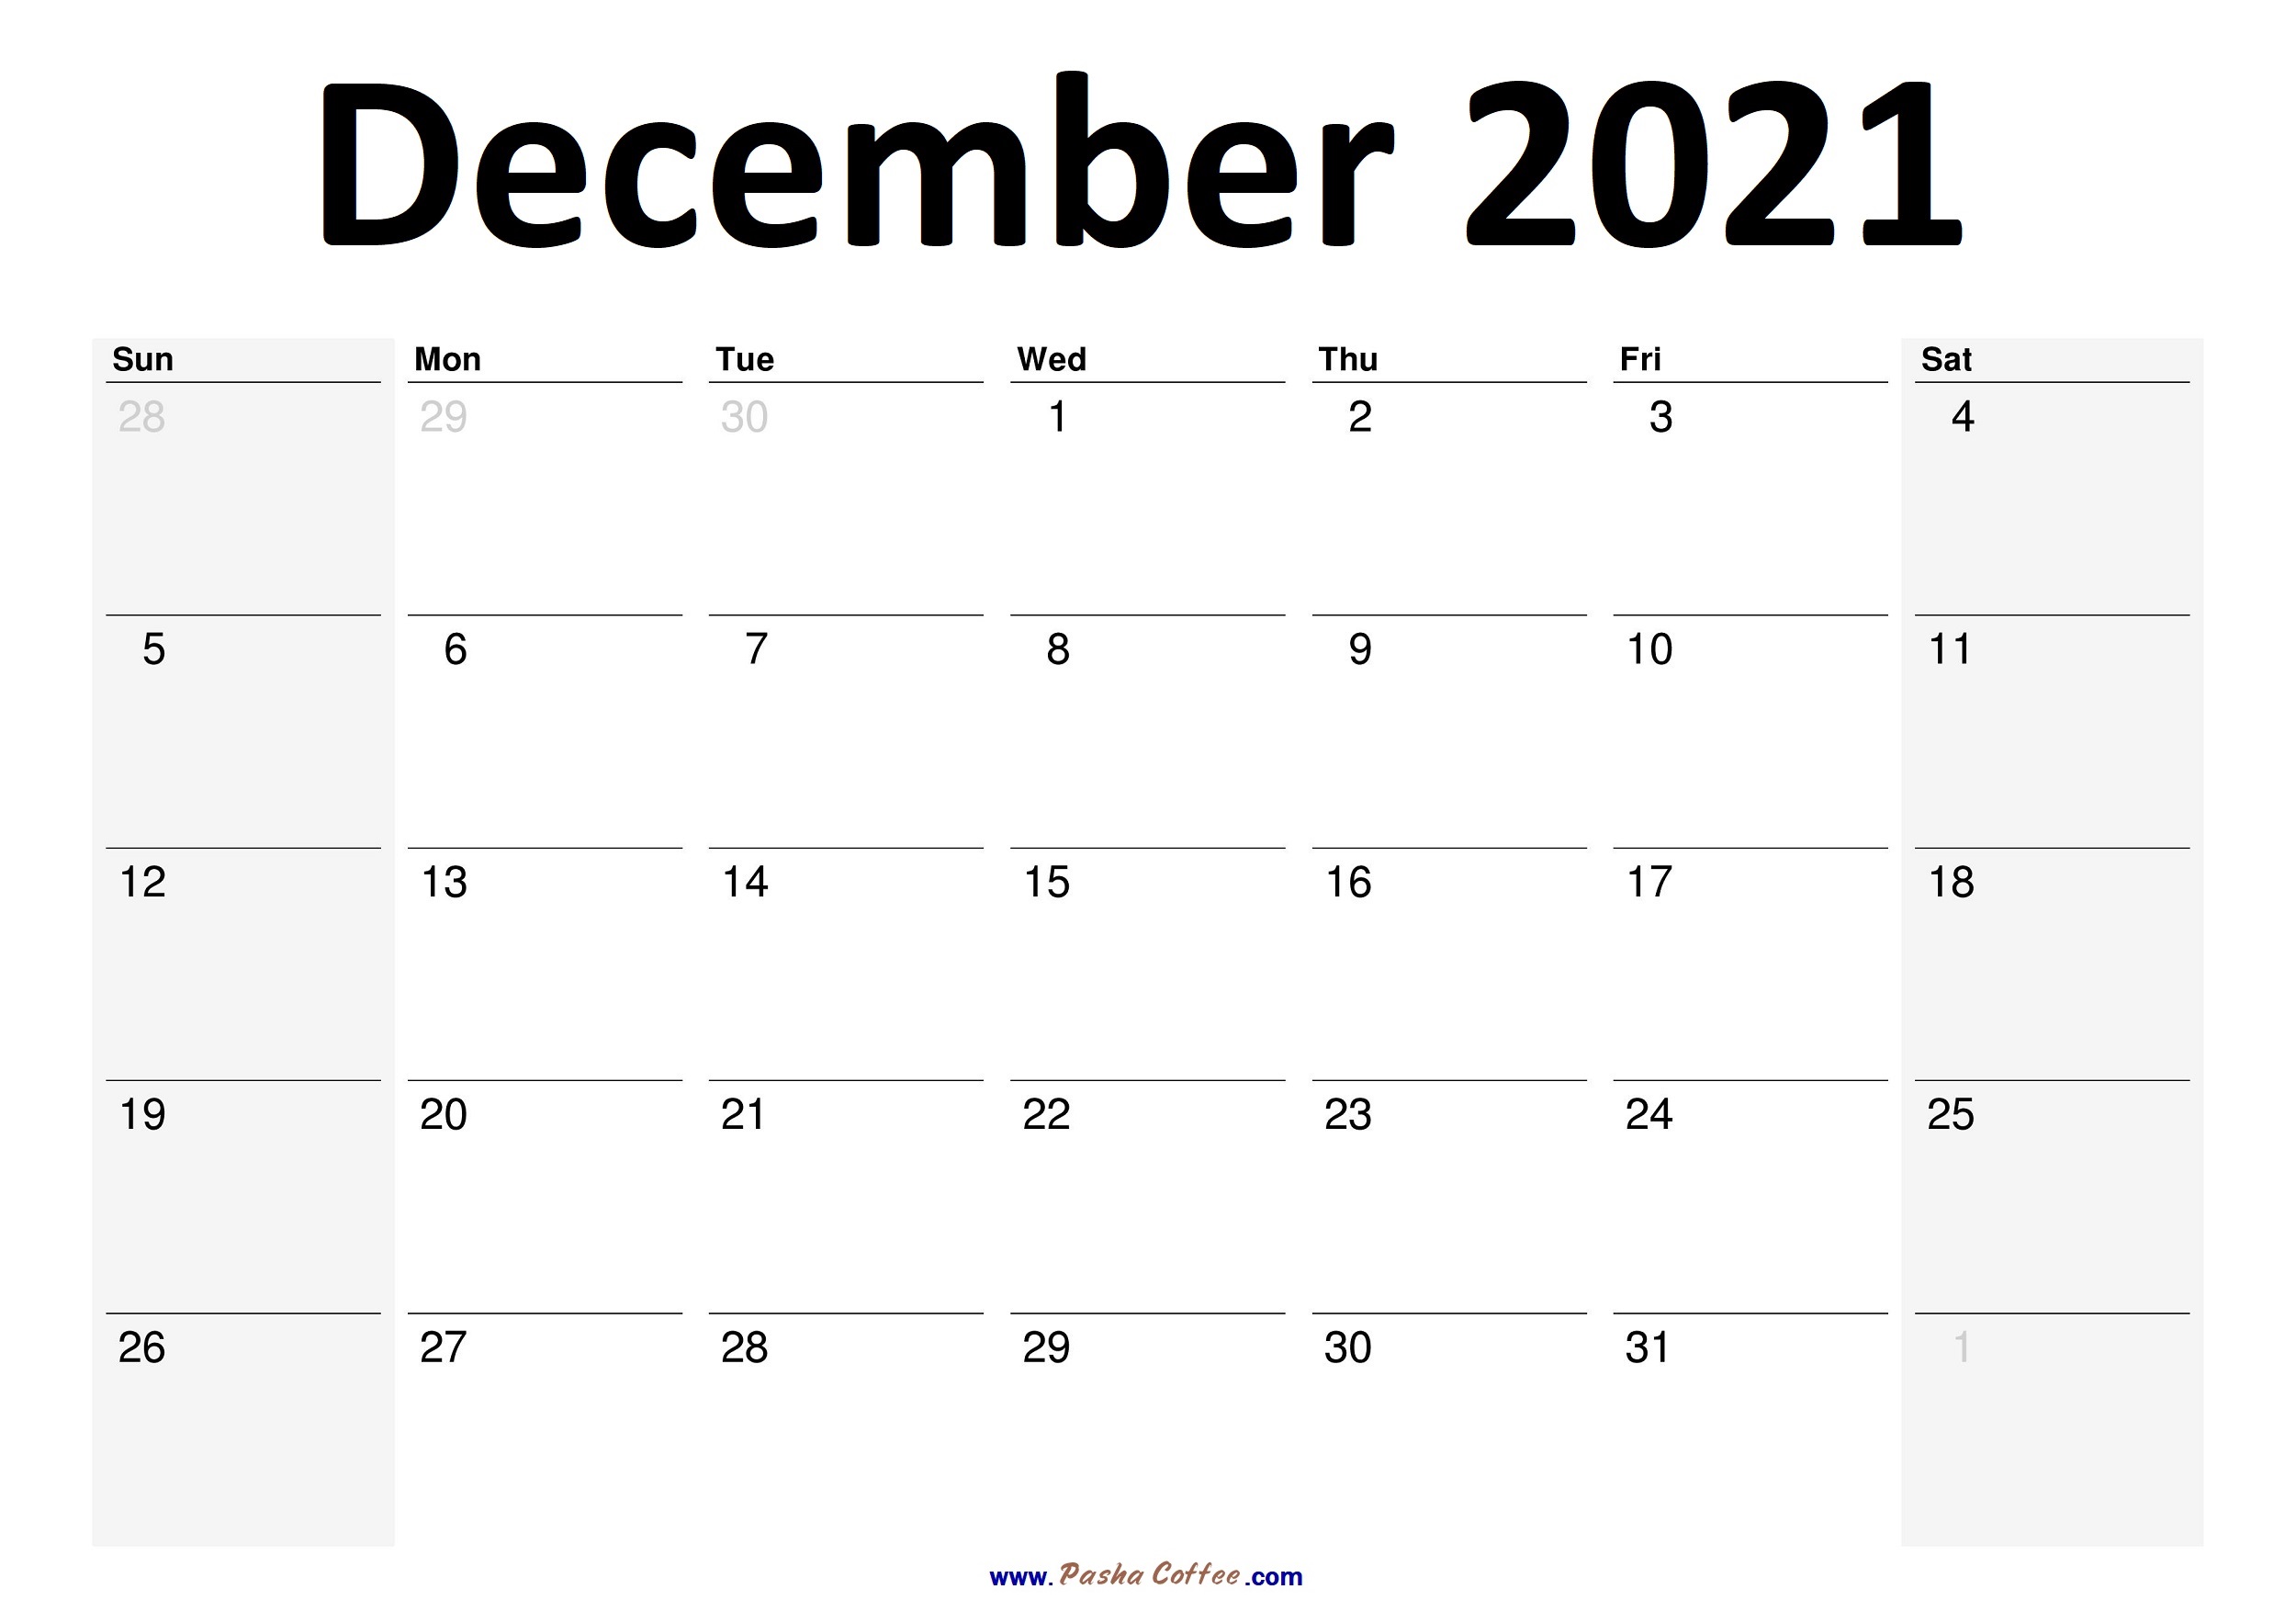 2021-December-Calendar-Planner01